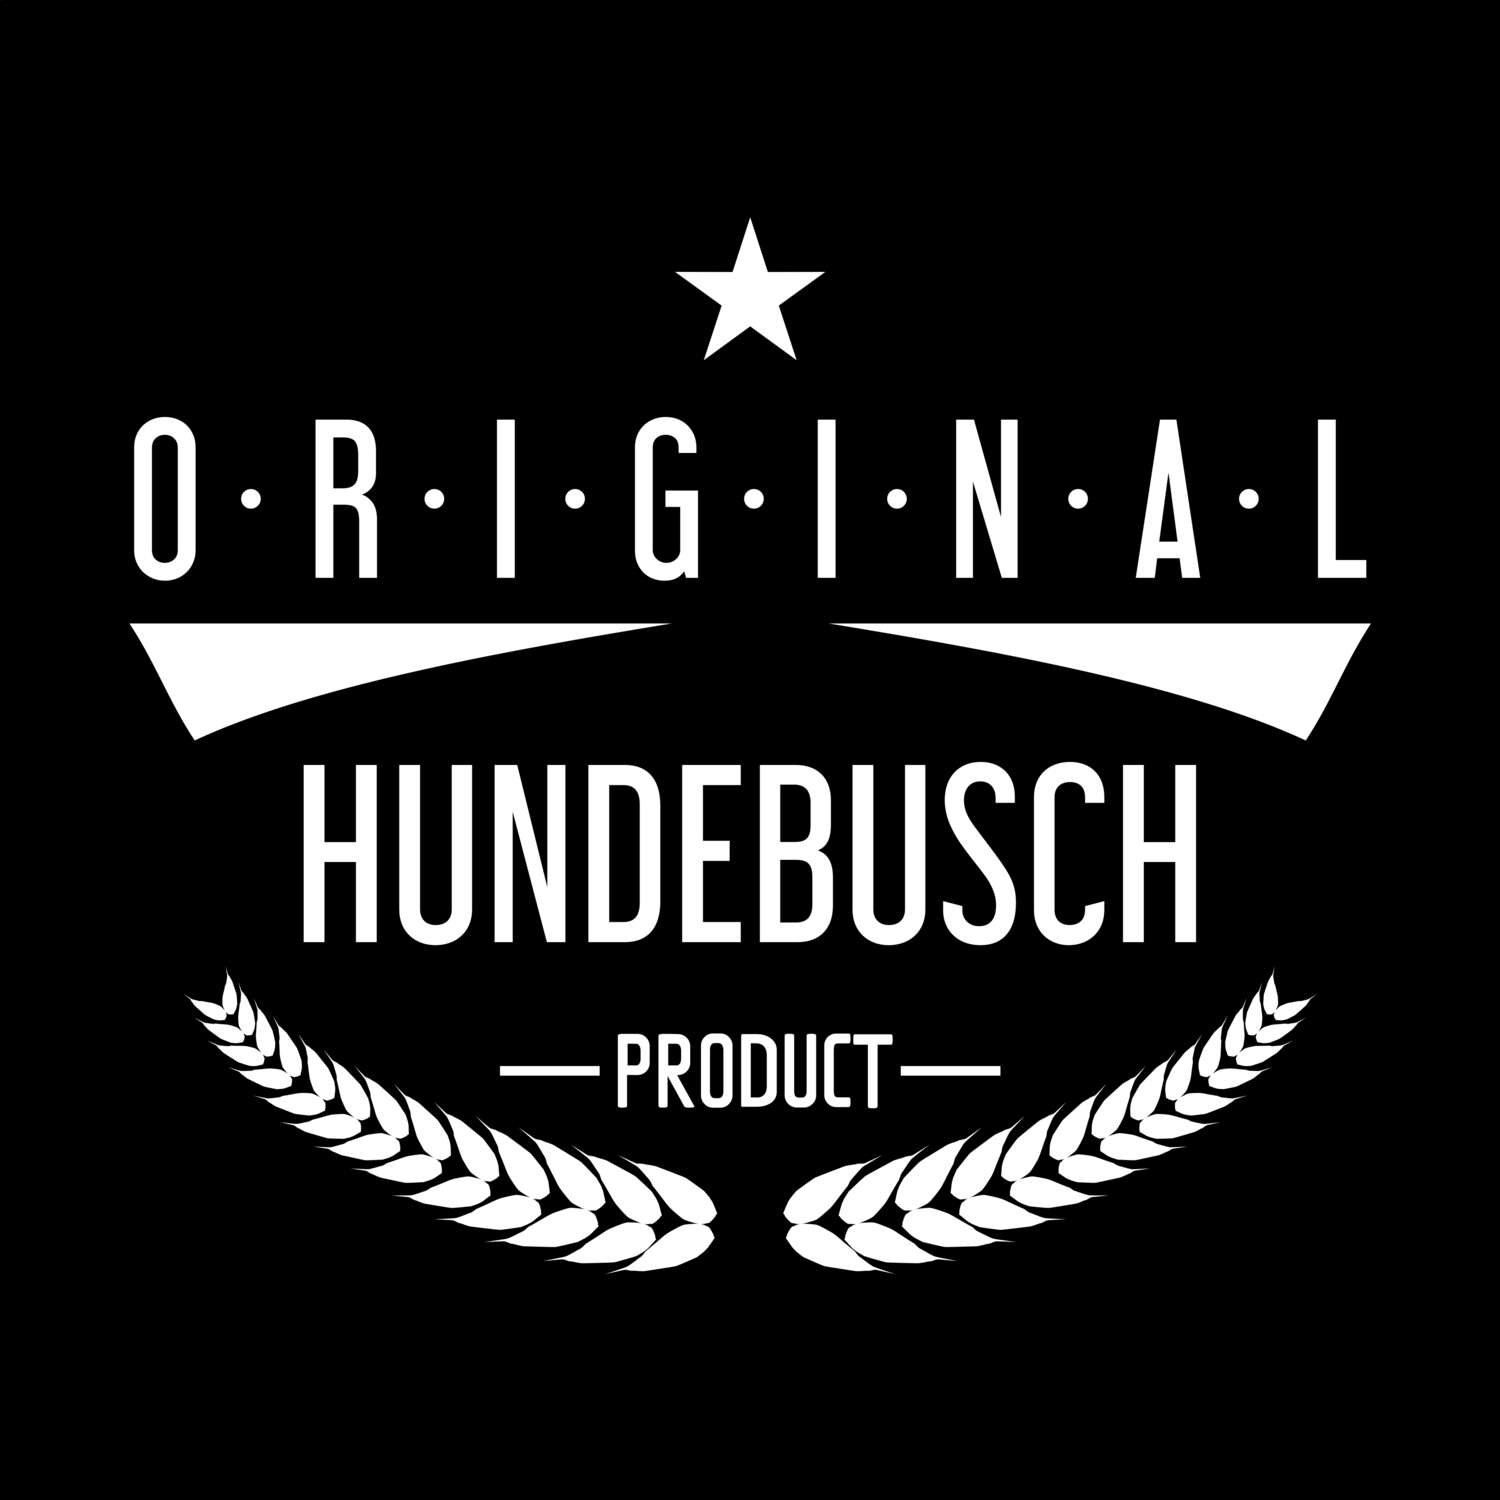 Hundebusch T-Shirt »Original Product«